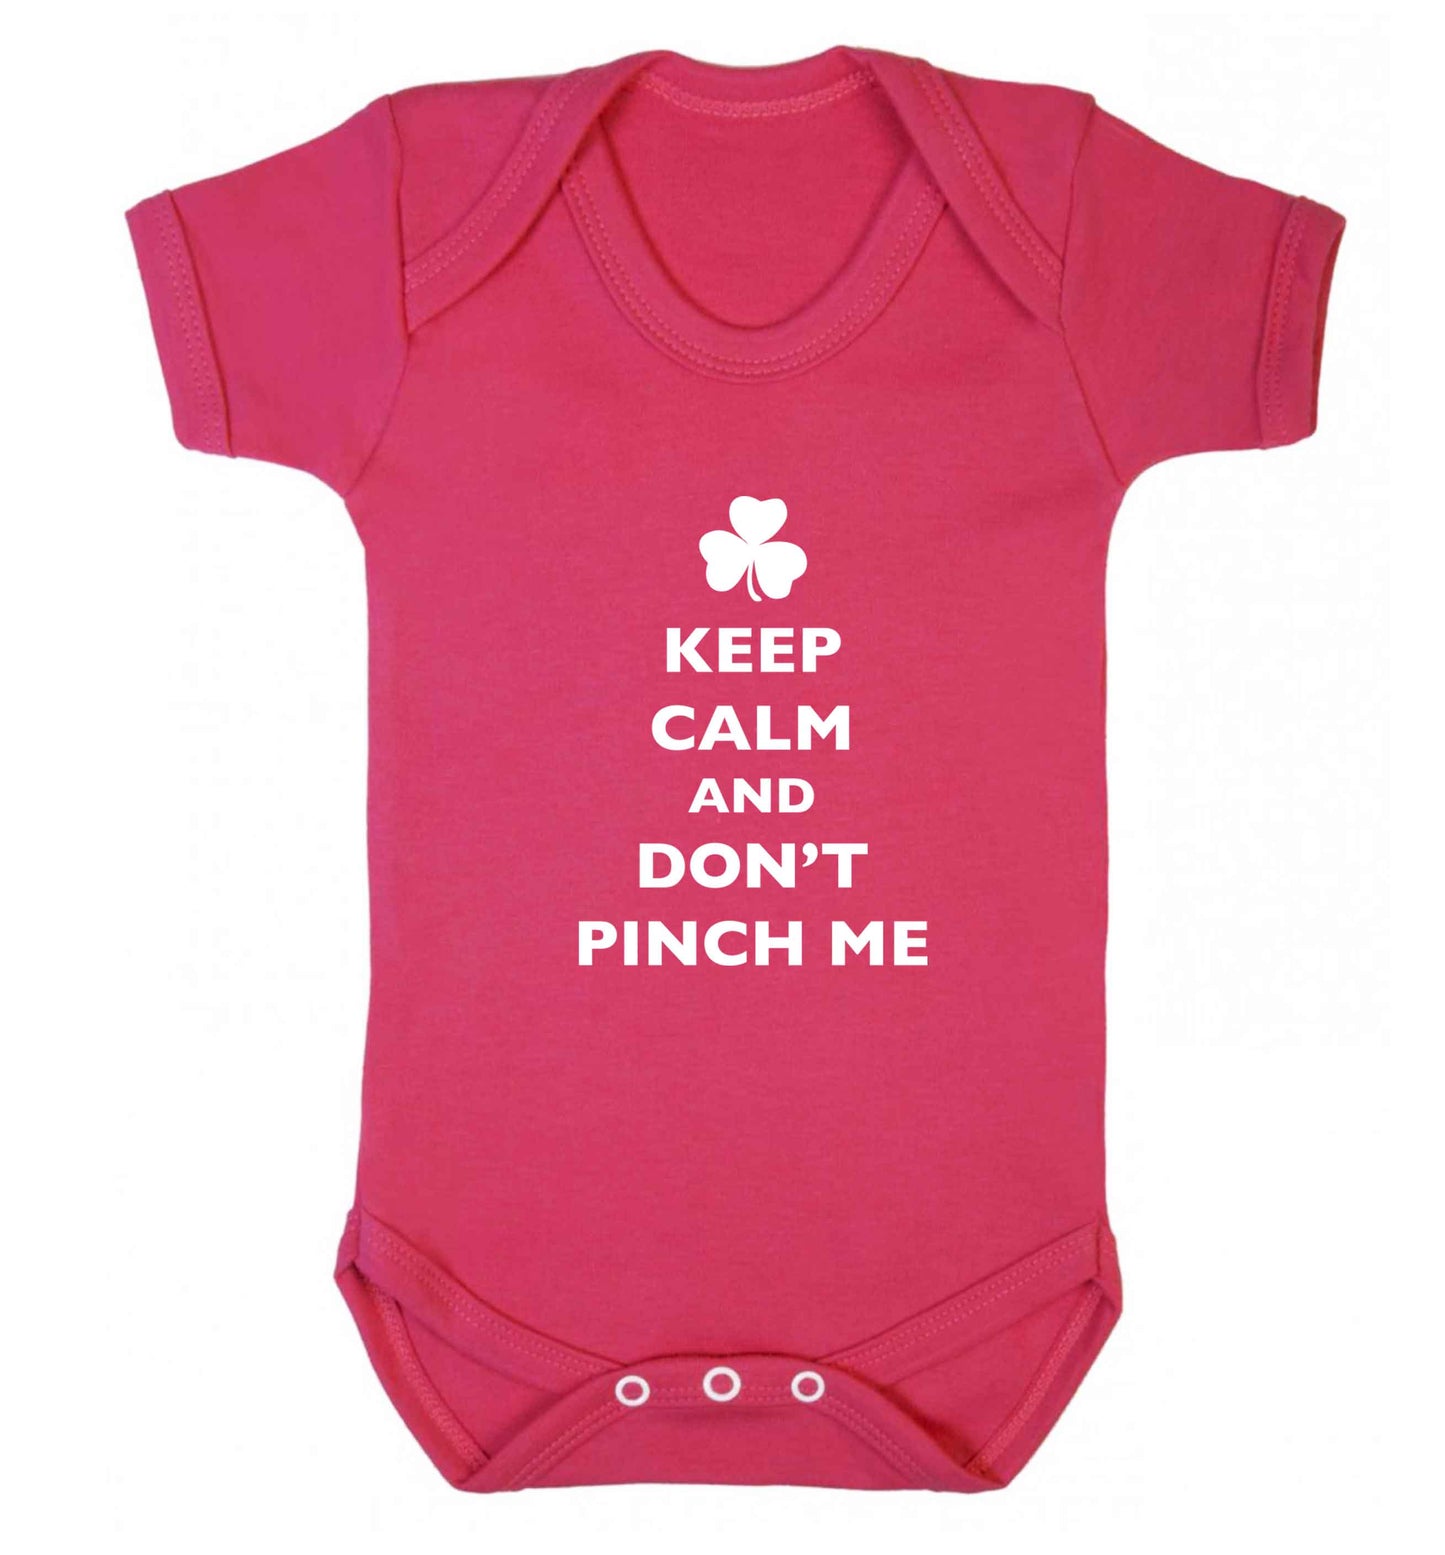 Keep calm and don't pinch me baby vest dark pink 18-24 months